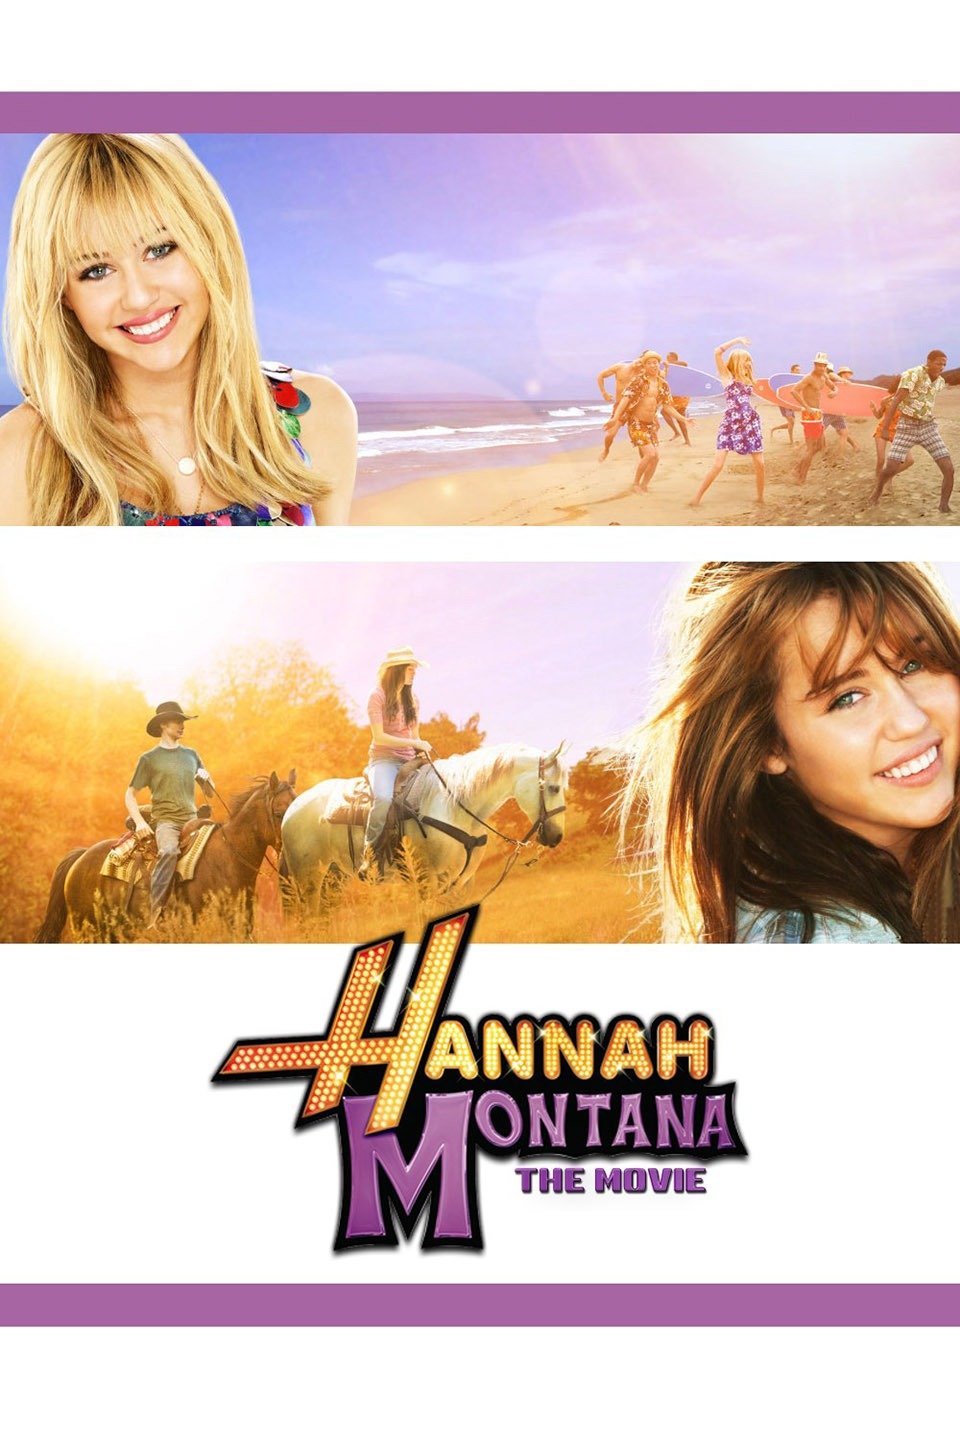 Hannah Montana The Movie Rotten Tomatoes